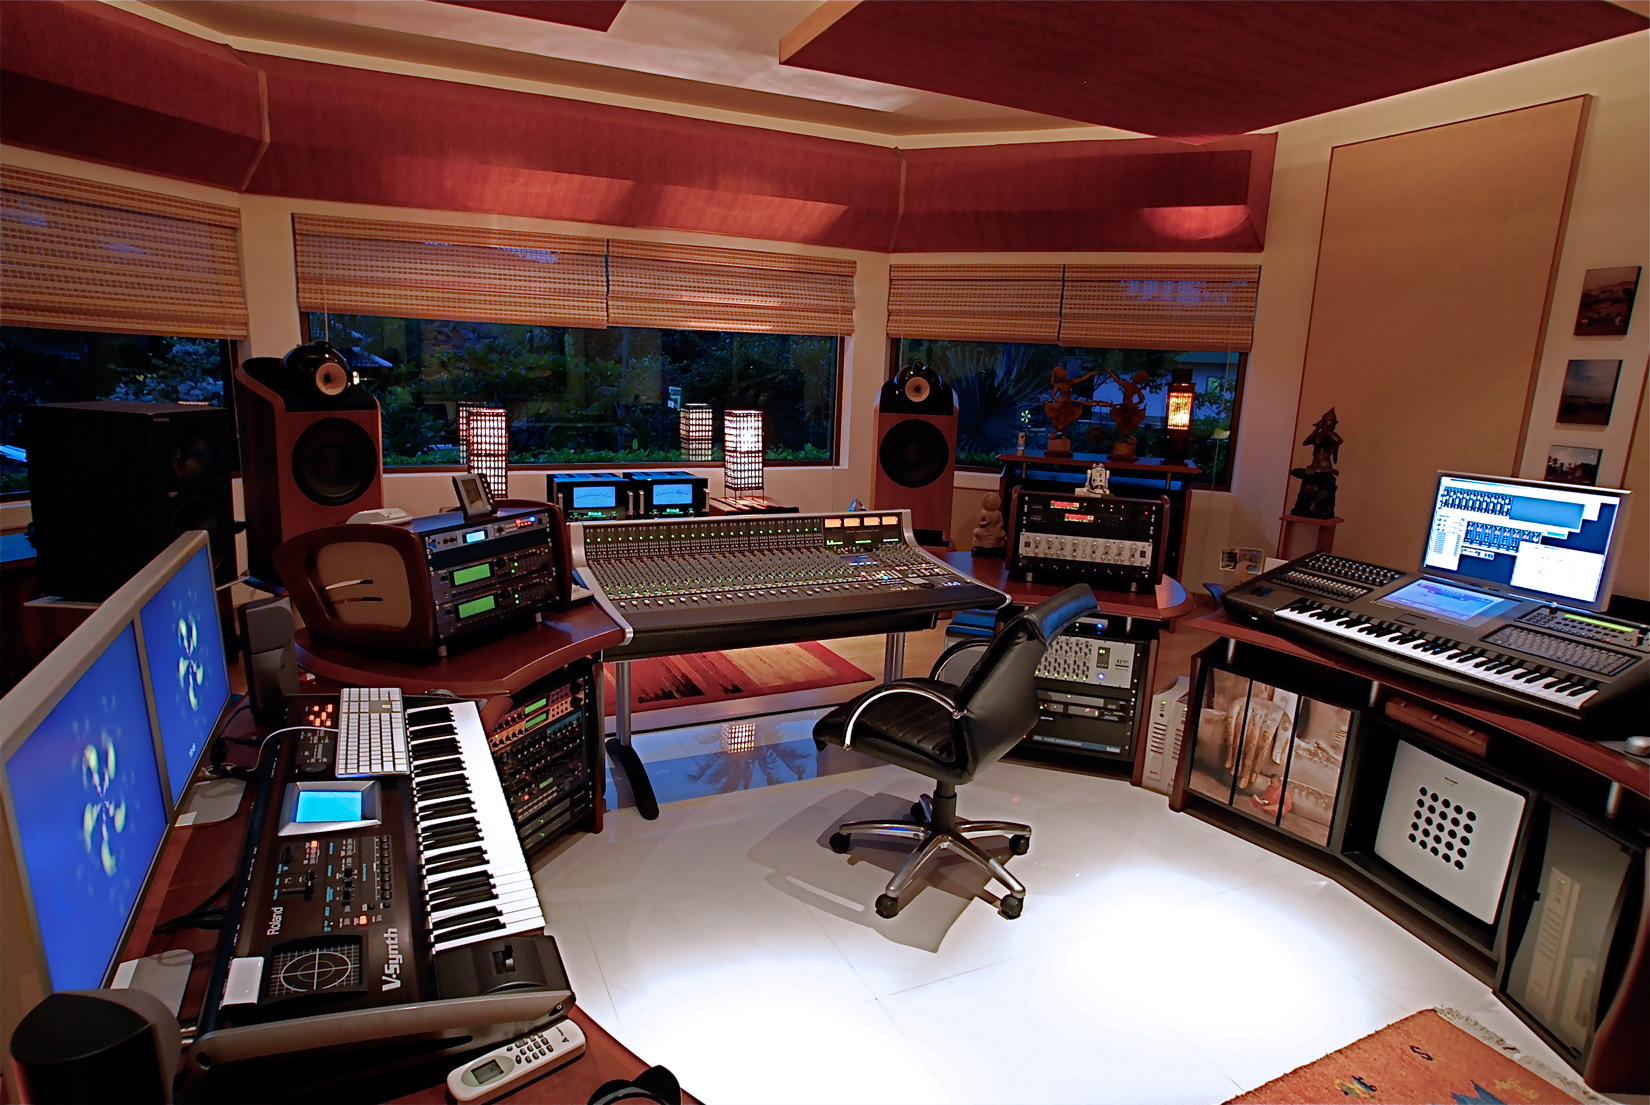 1000+ images about Studio on Pinterest Recording studio, Home recording stu...